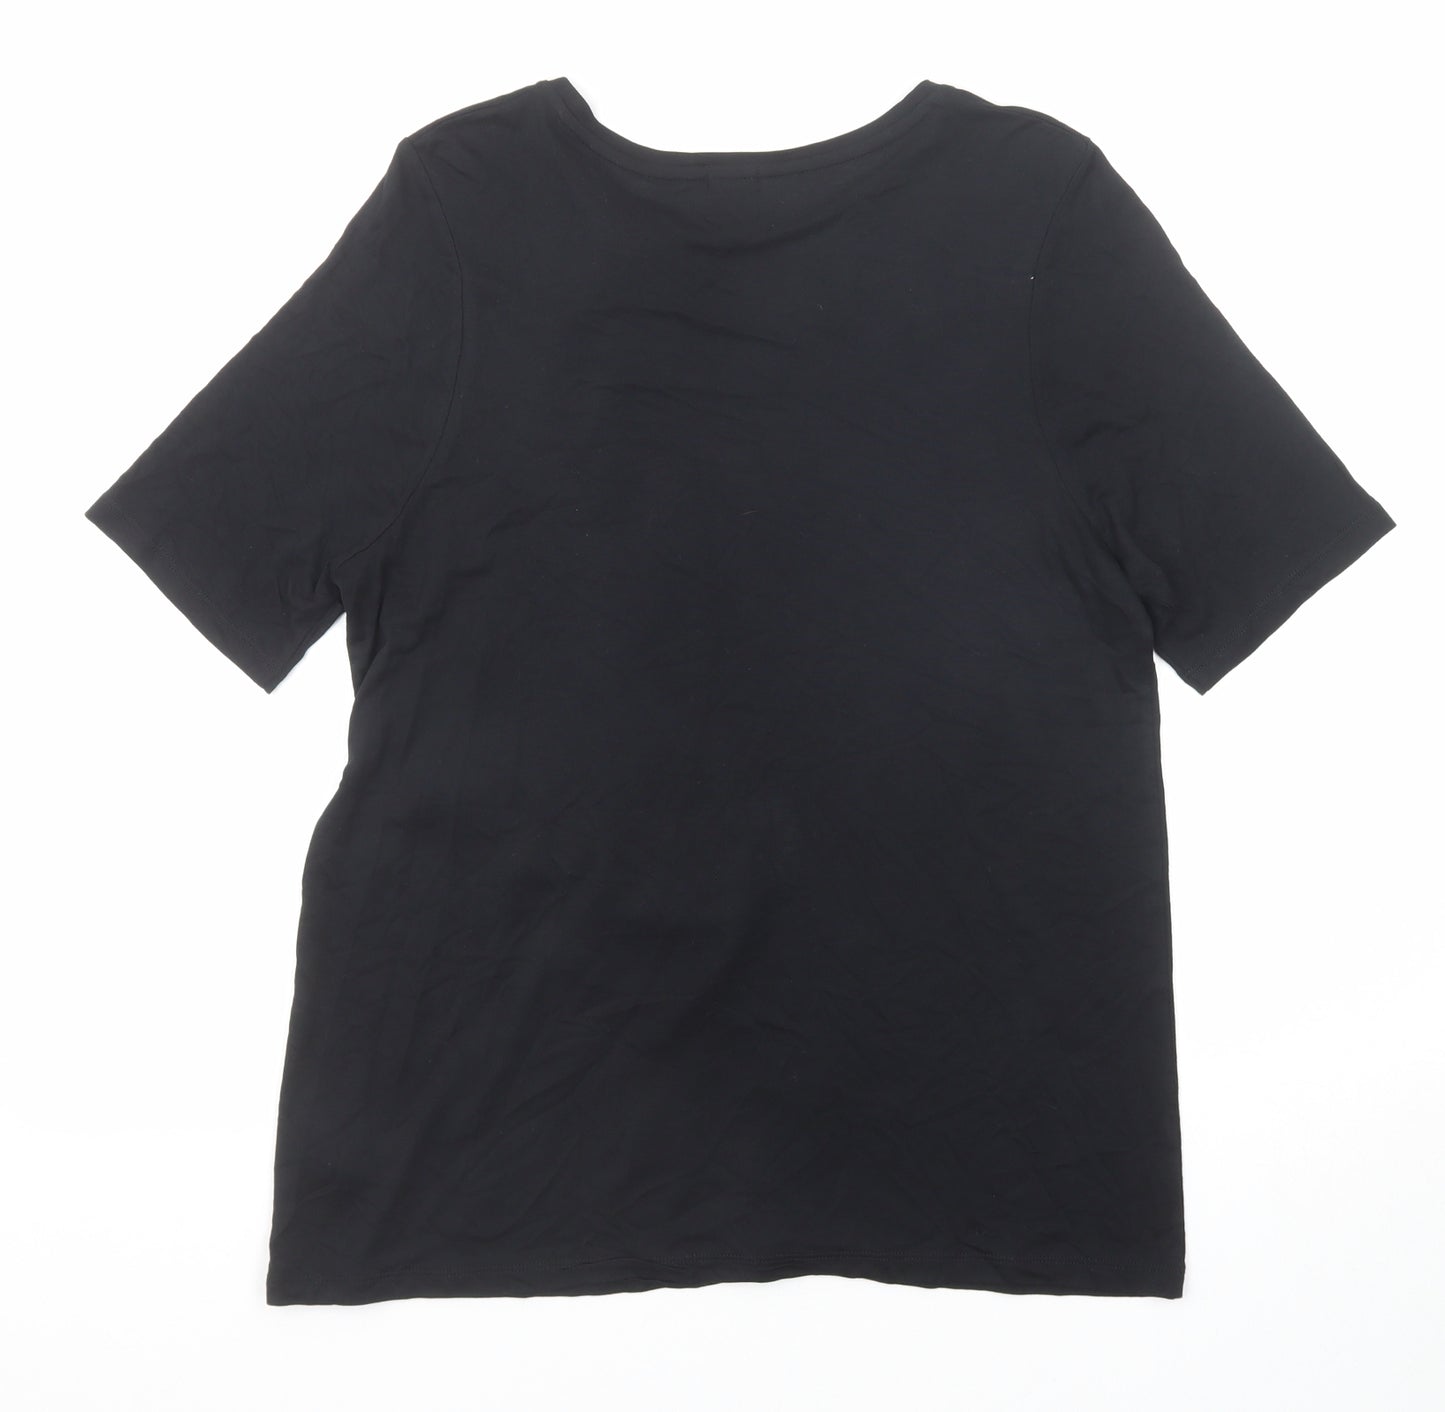 River Island Womens Black Viscose Basic T-Shirt Size S Boat Neck - Tie Neck Detail